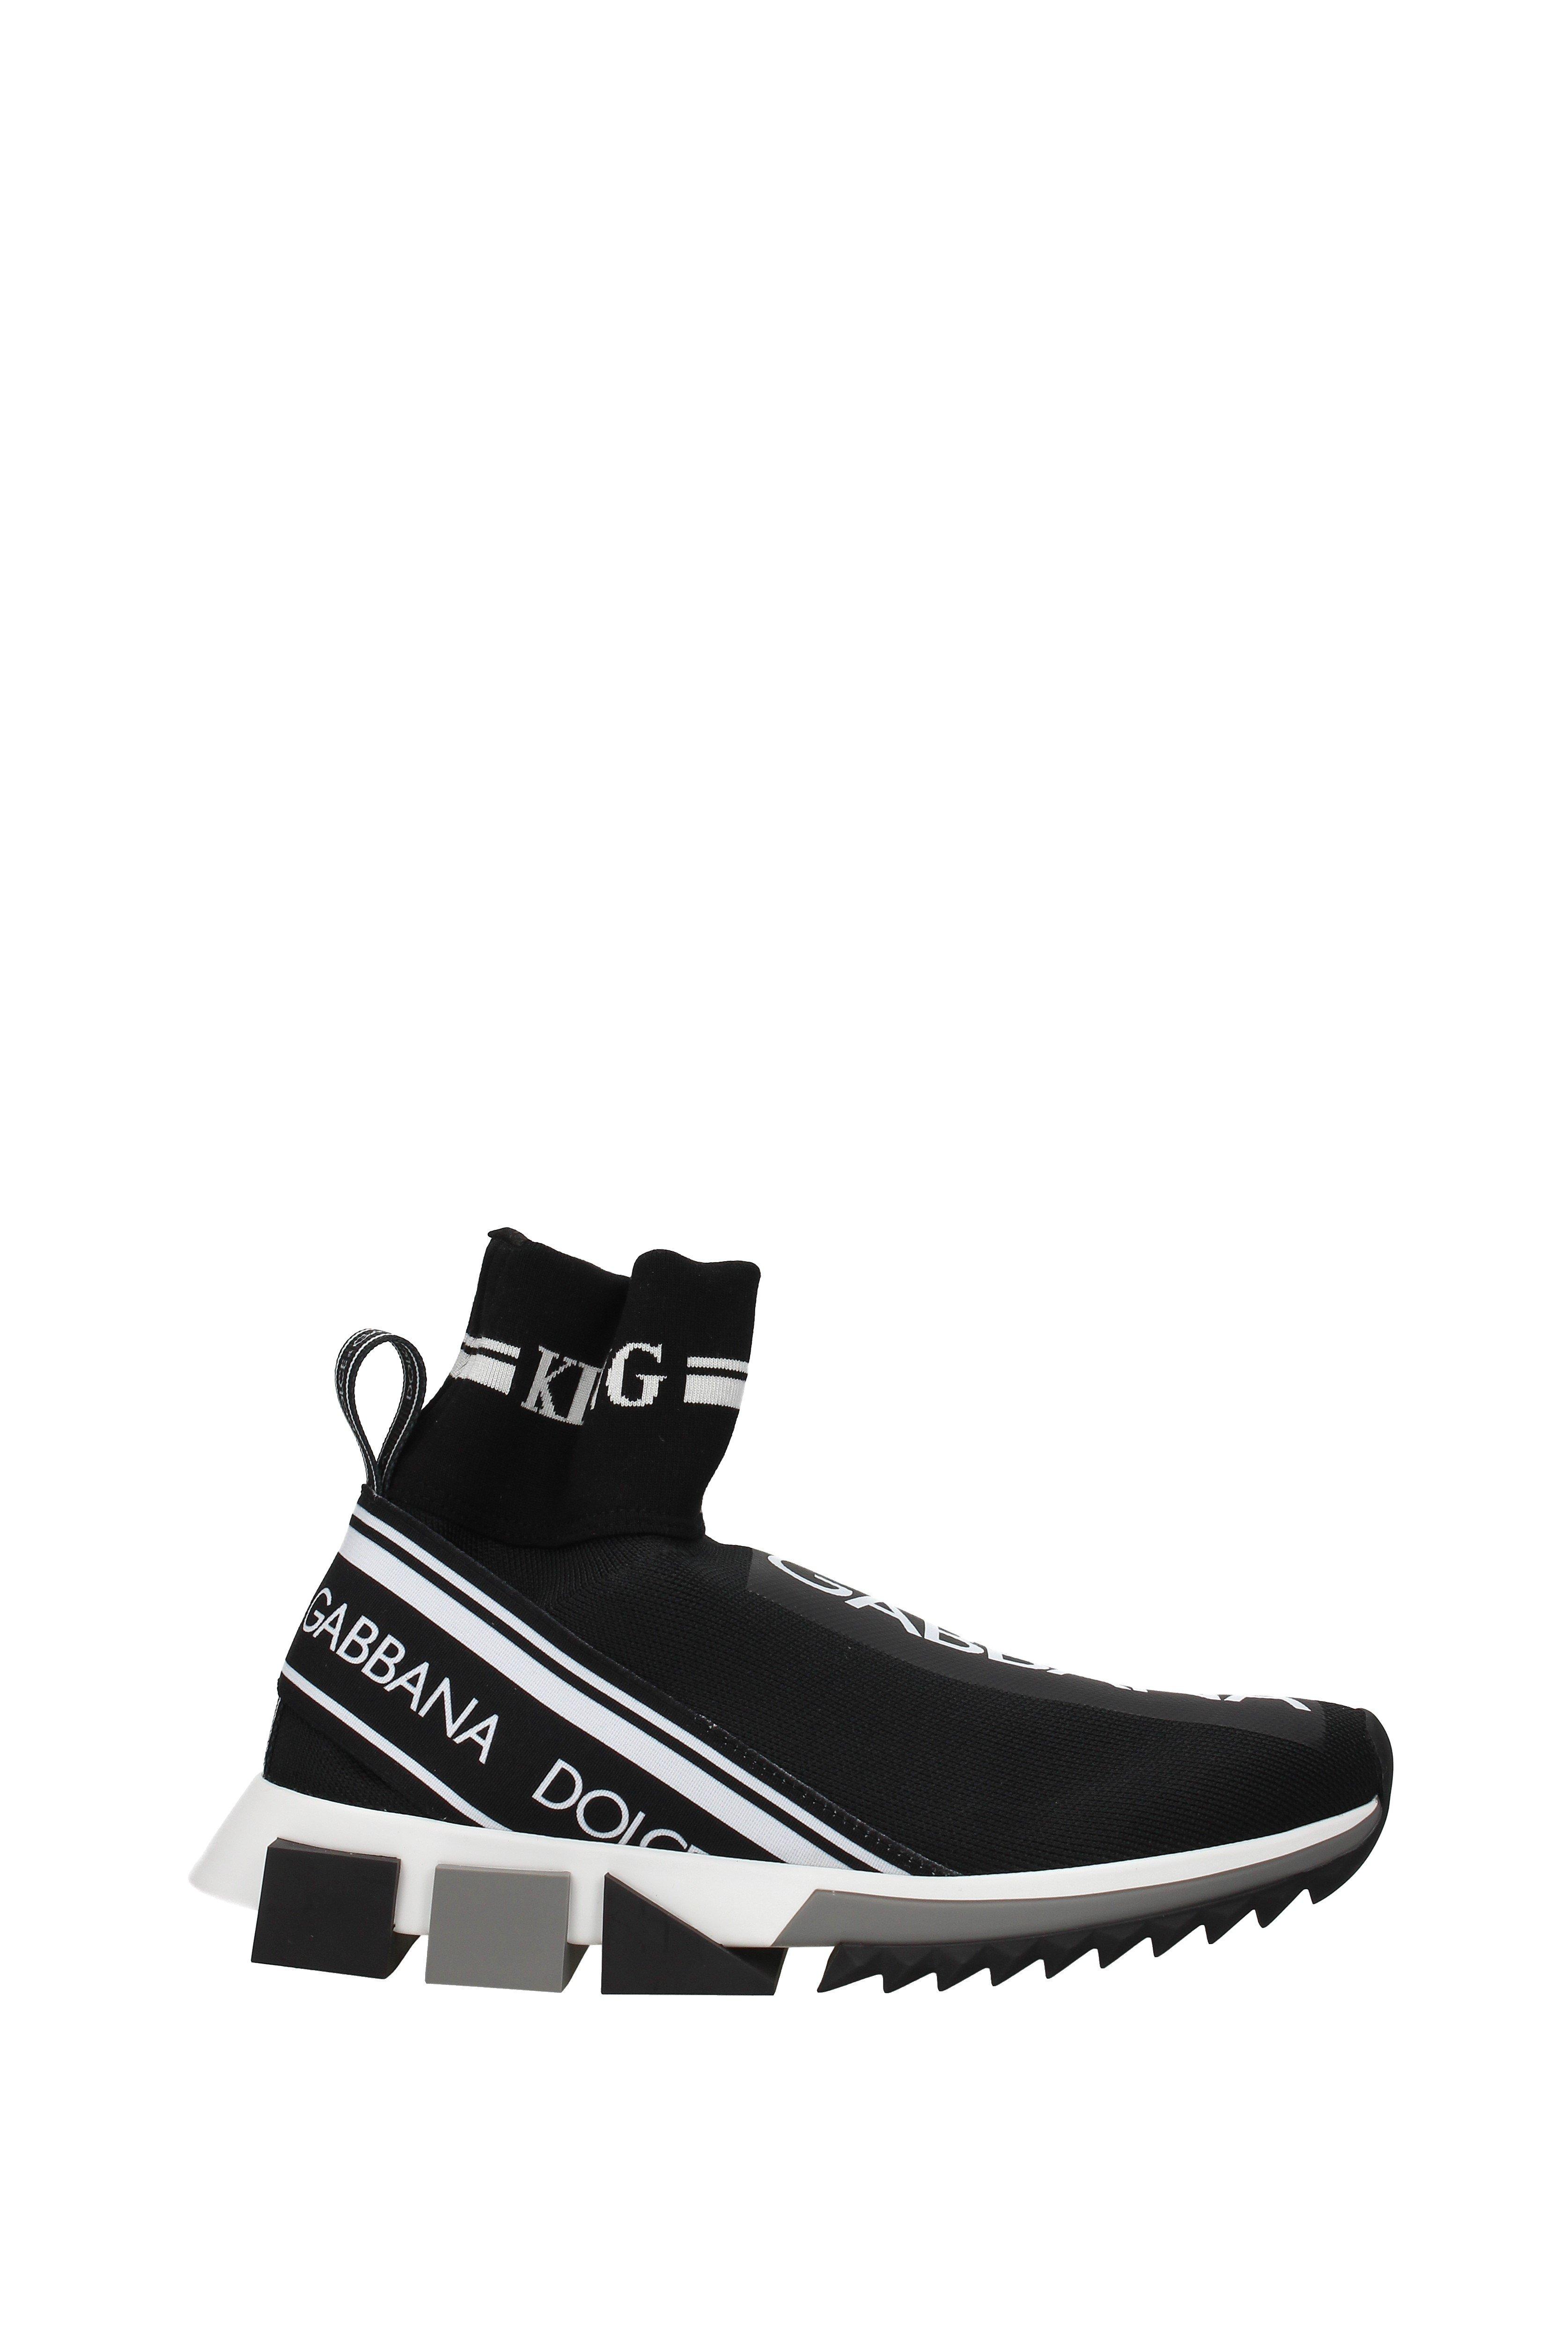 Dolce & Gabbana Sneakers Men Black in Black for Men - Lyst